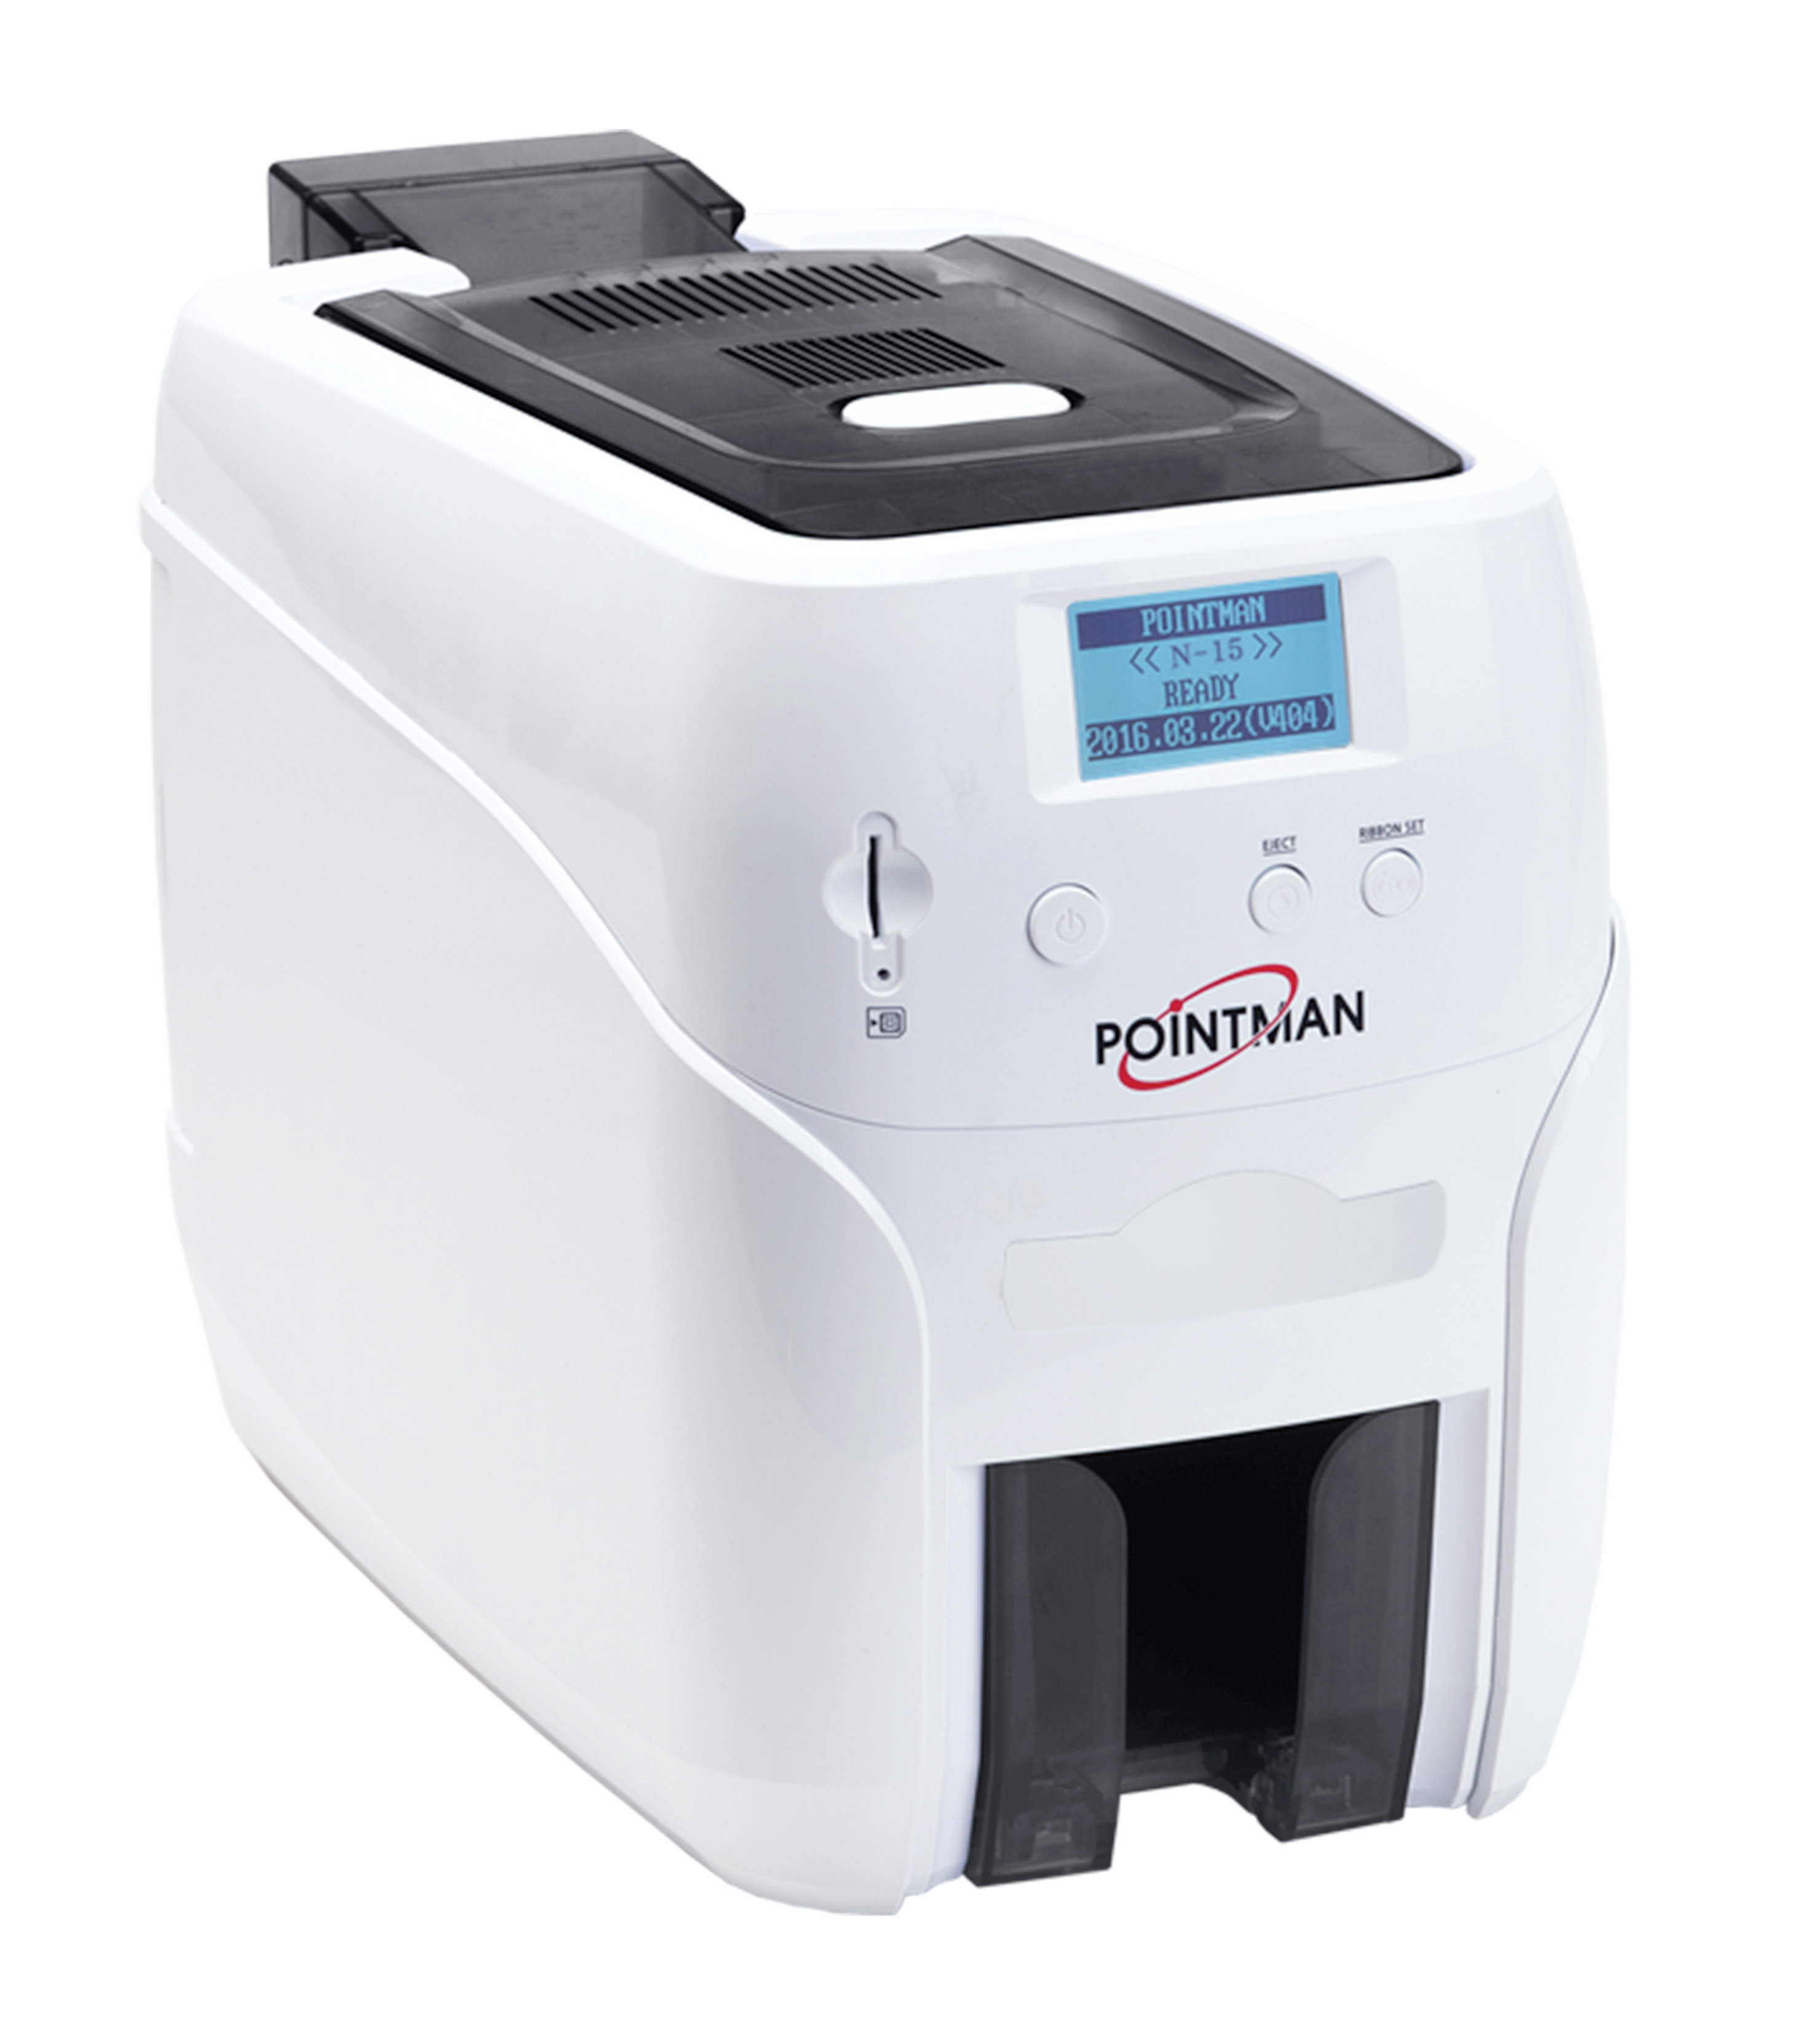 Принтер пластиковых карт Pointman Nuvia N15, 300 dpi, USB, Ethernet, N15-0001-00-S